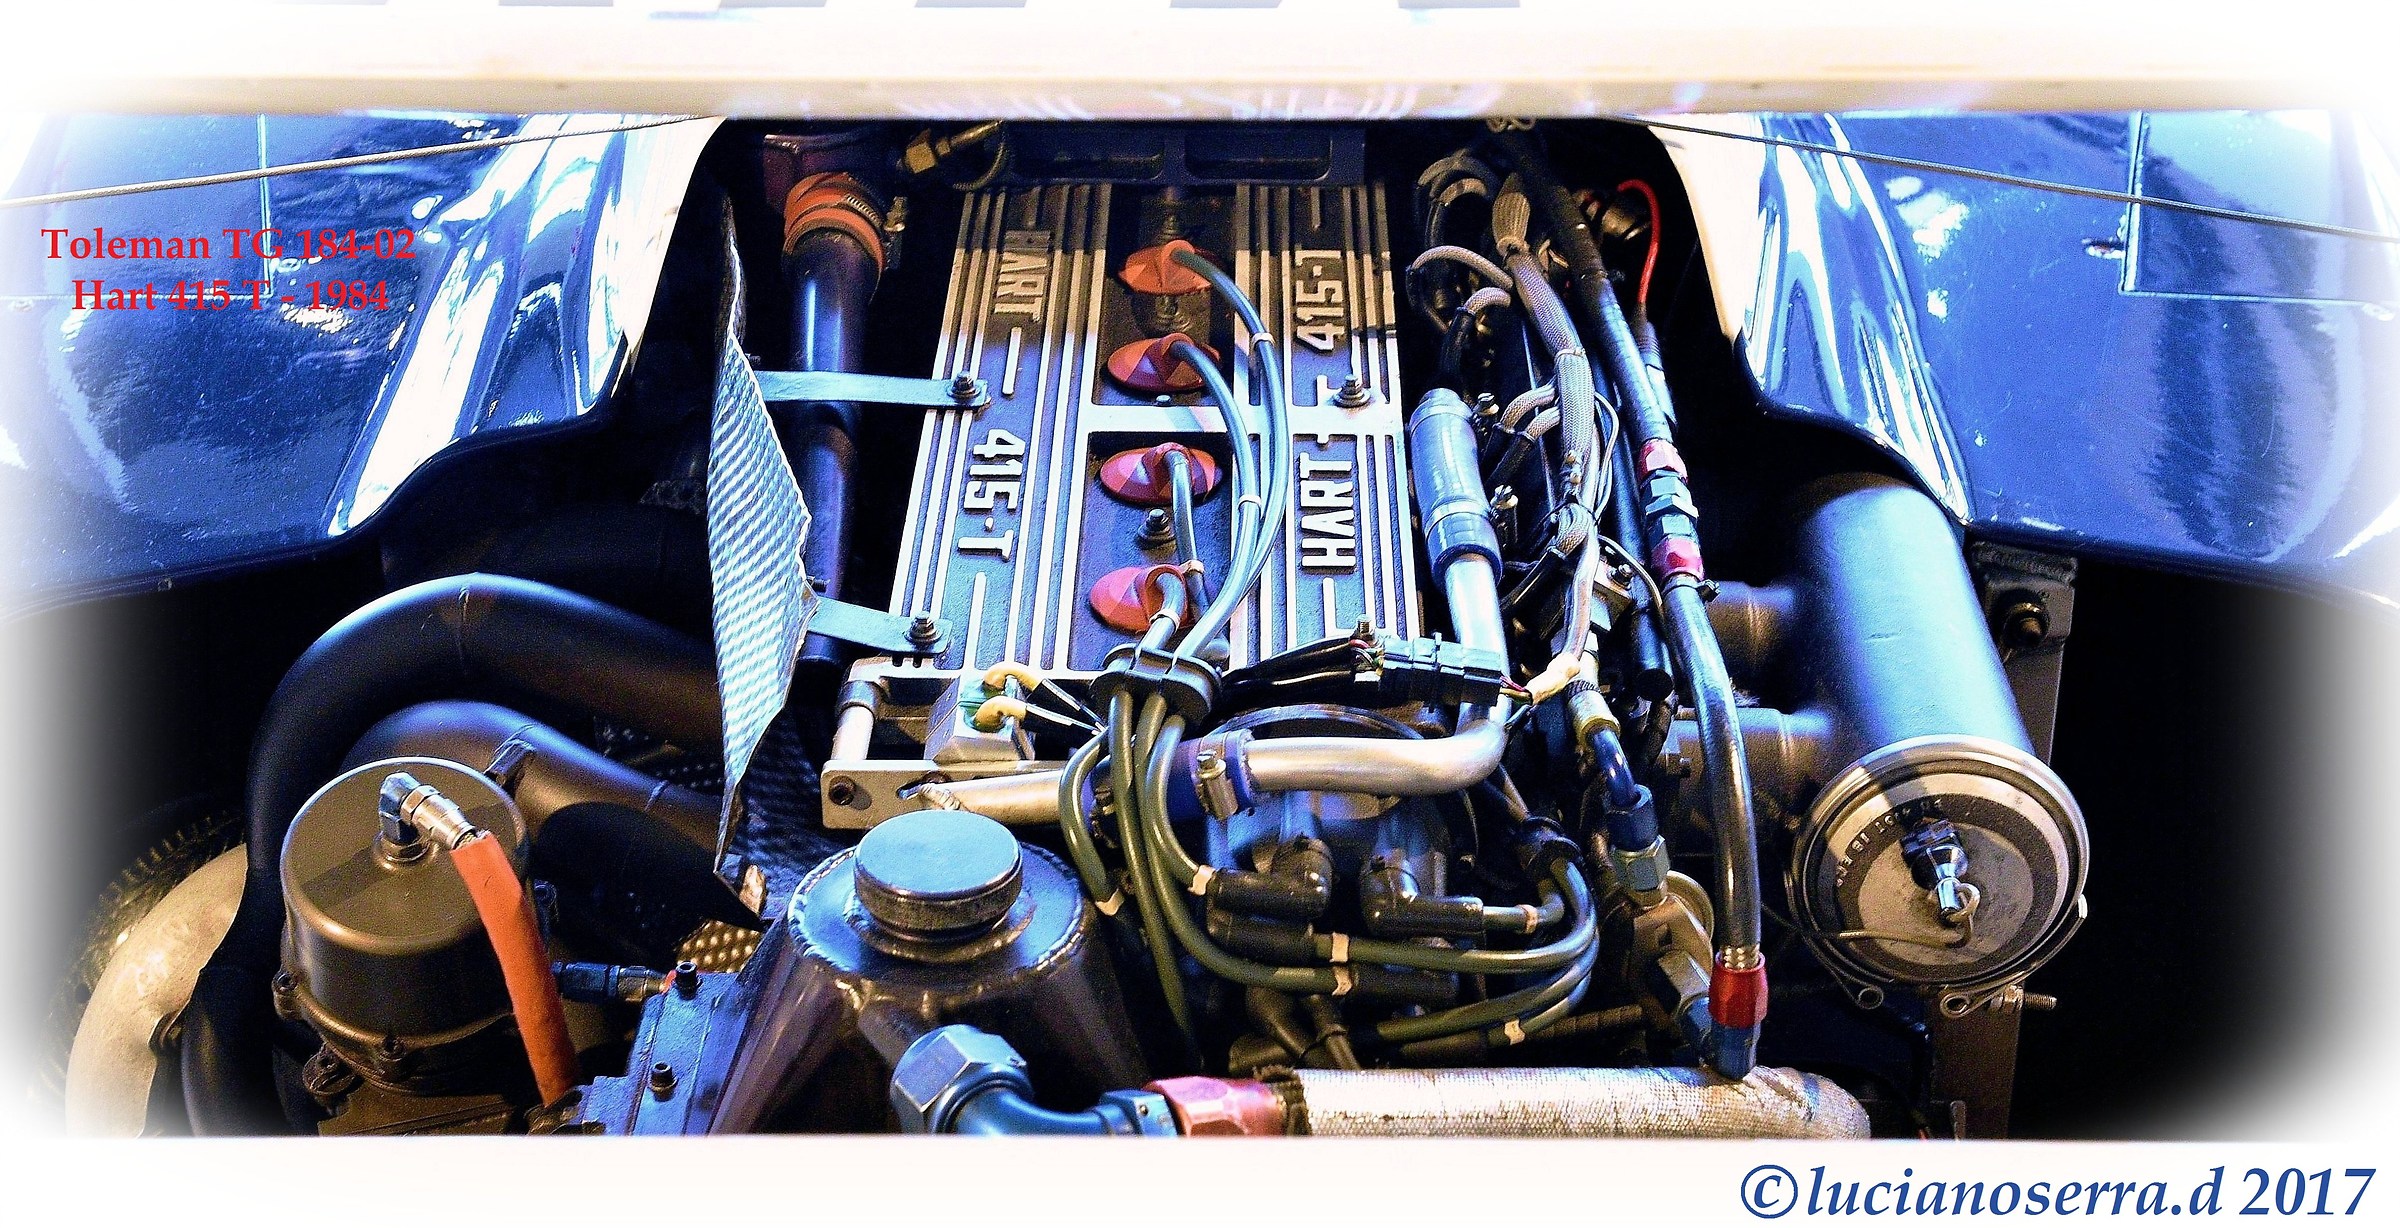 Motore Hart 415 Turbo della Toleman TG 184-02 - 1984...